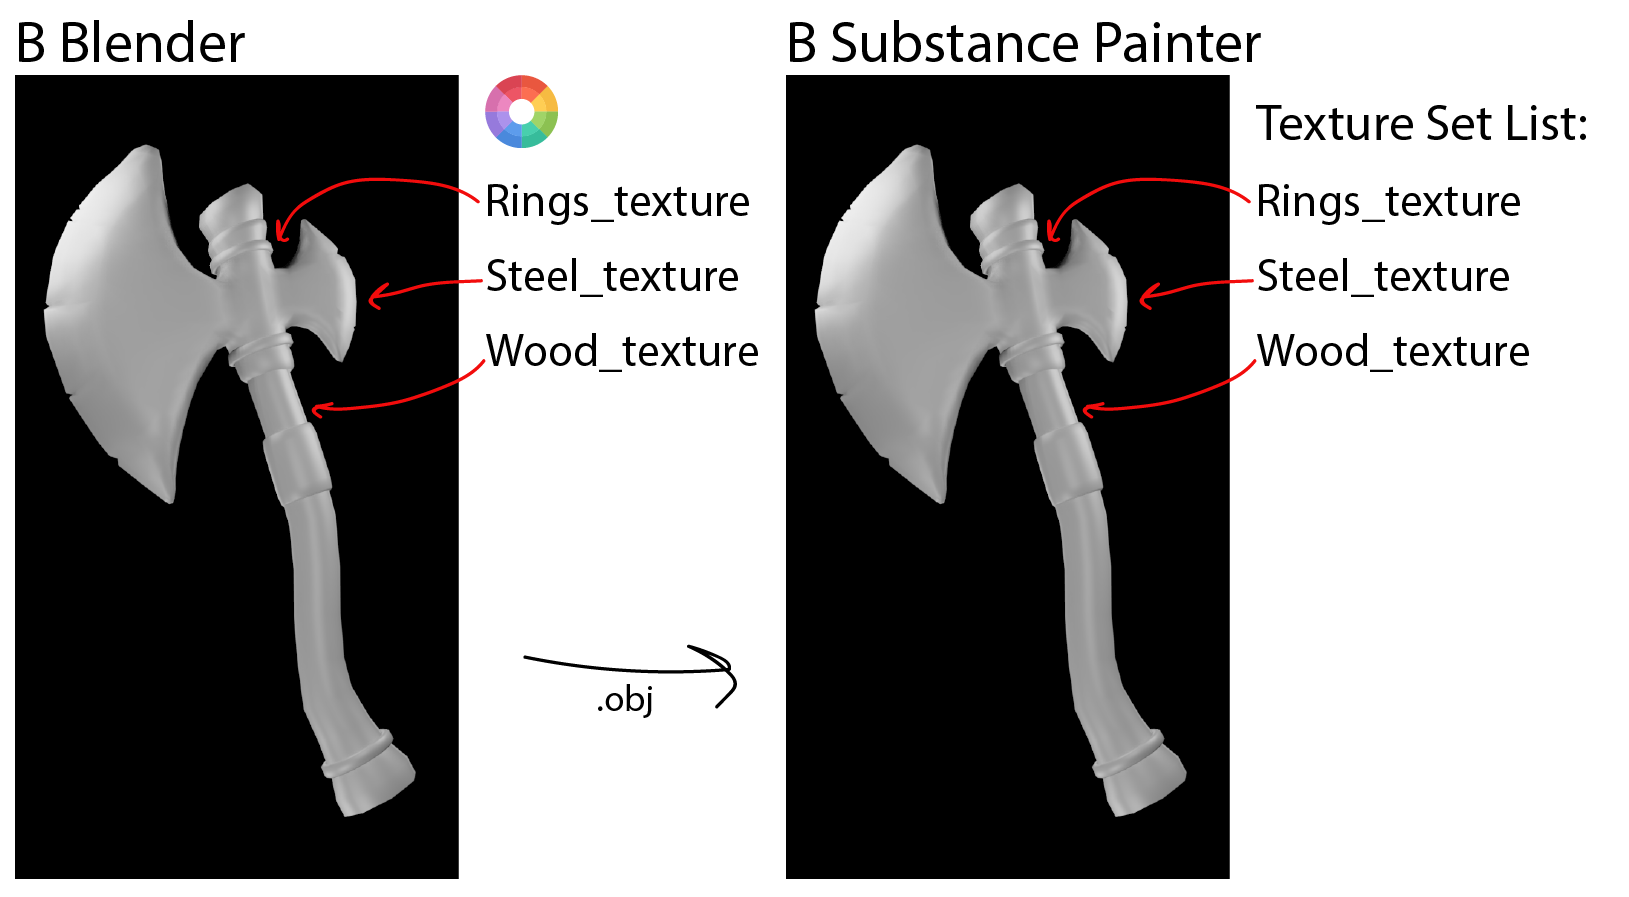 Merge texture sets, или как делать один набор текстур в Substance Painter - 2